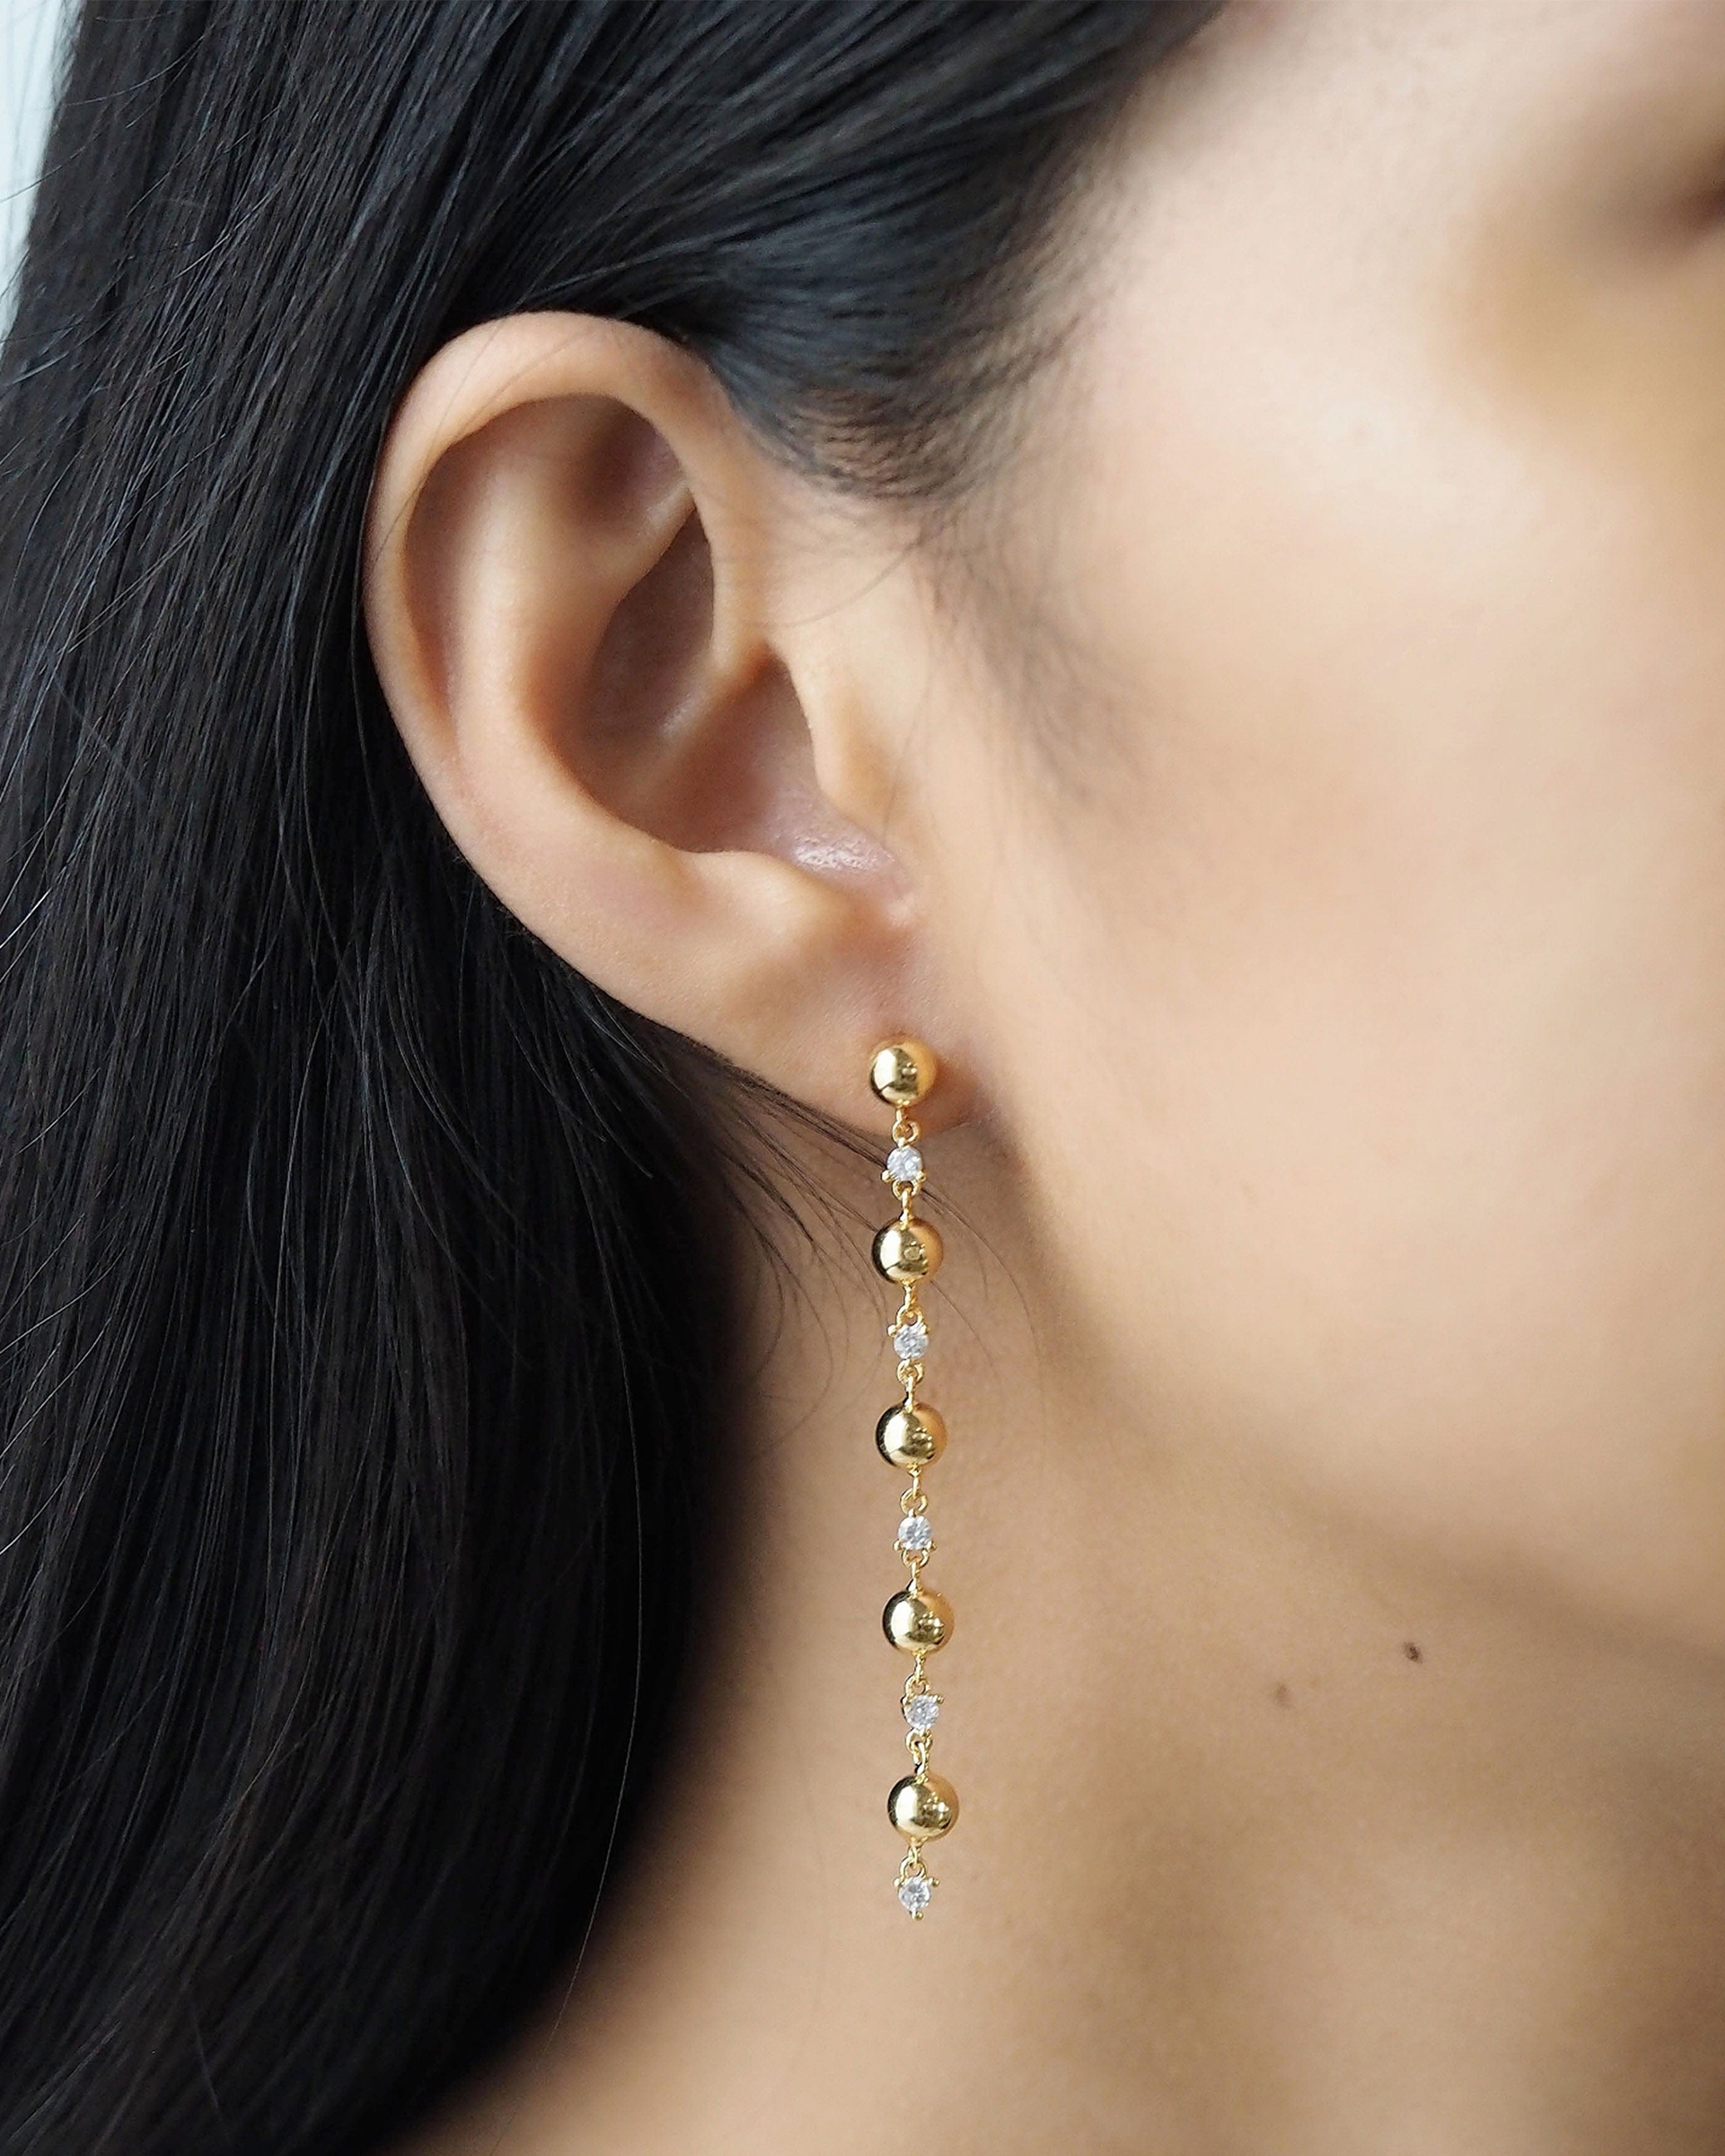 TAI JEWELRY Earrings Linear Alternating Gold Ball And Cz Drop Earring